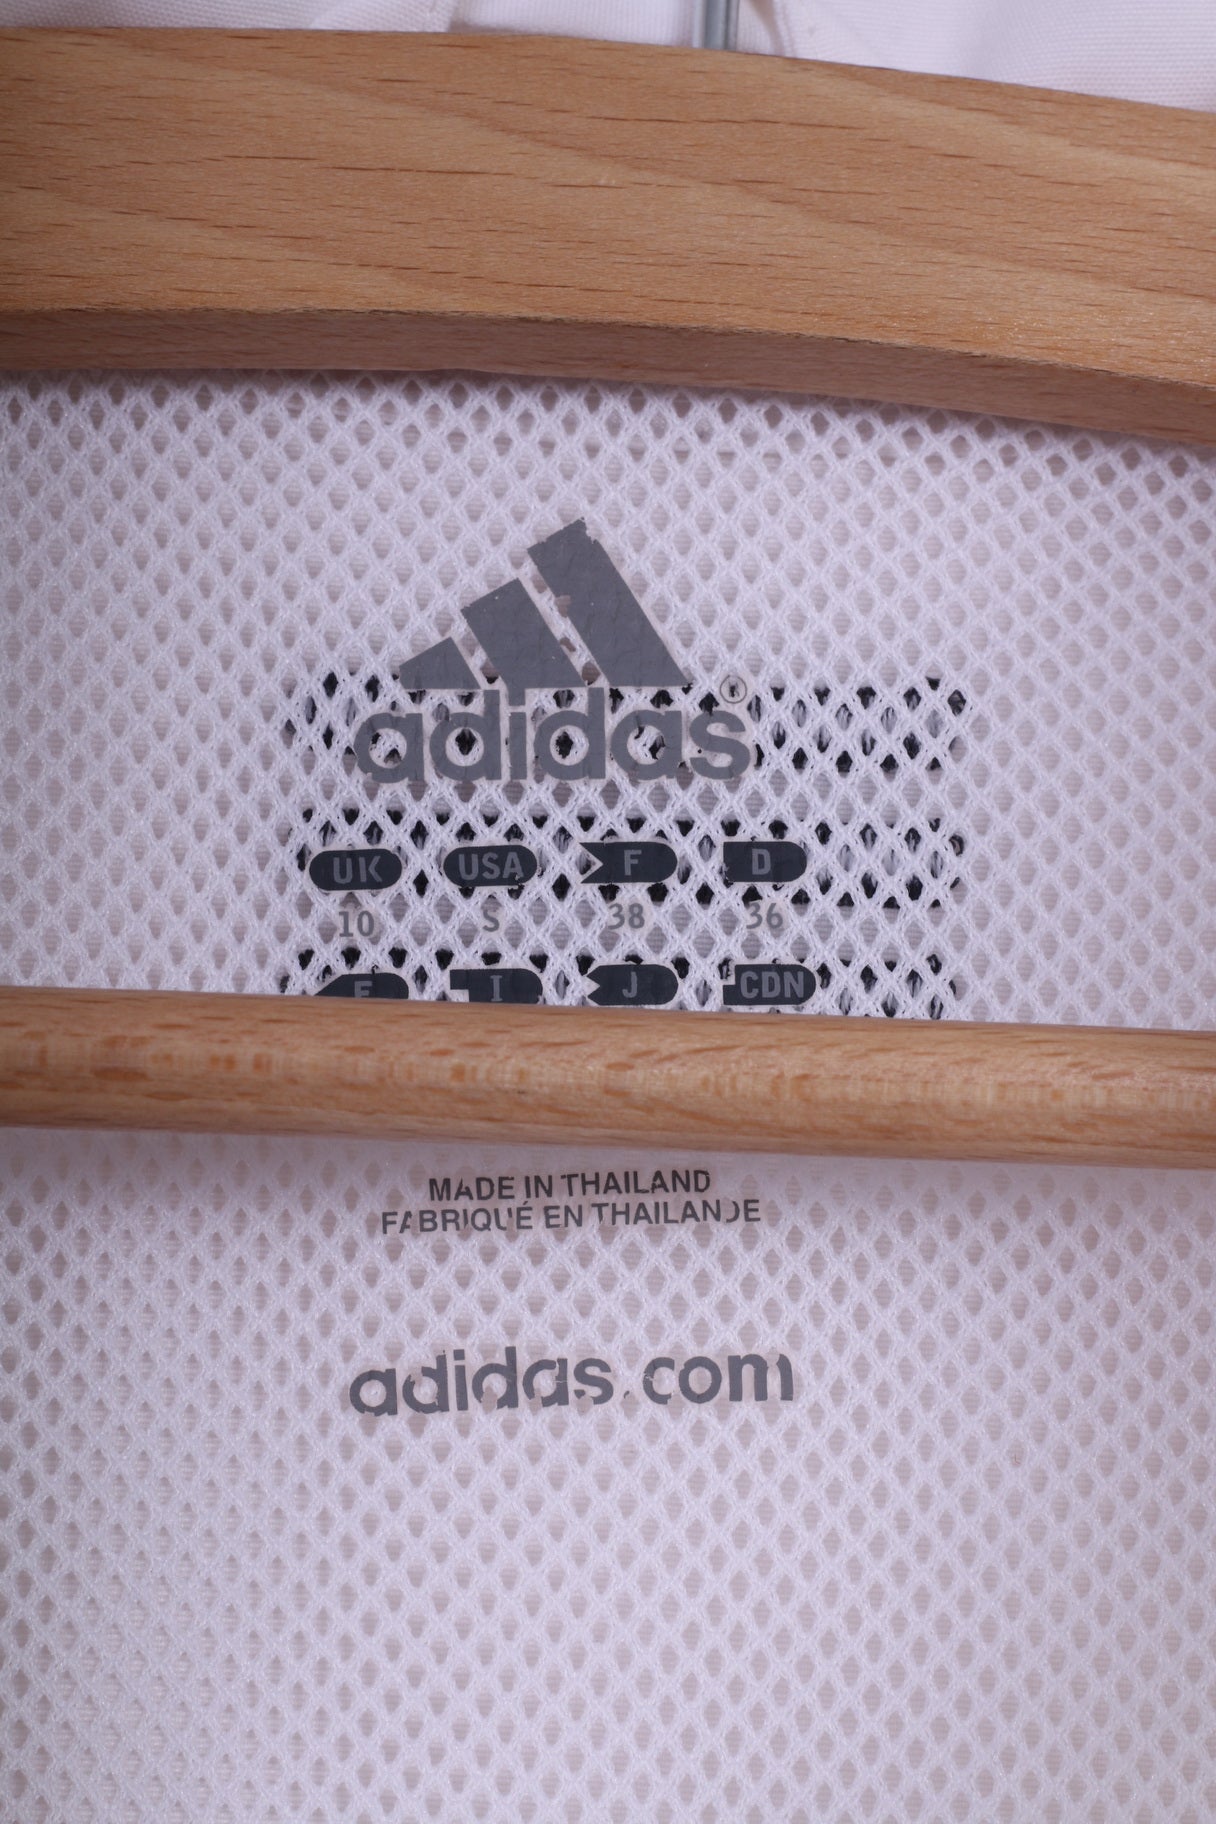 Adidas Hervis Sports Tc-Sautens Womens 10 S Lightweight Jacket White Full Zipper Sportswear